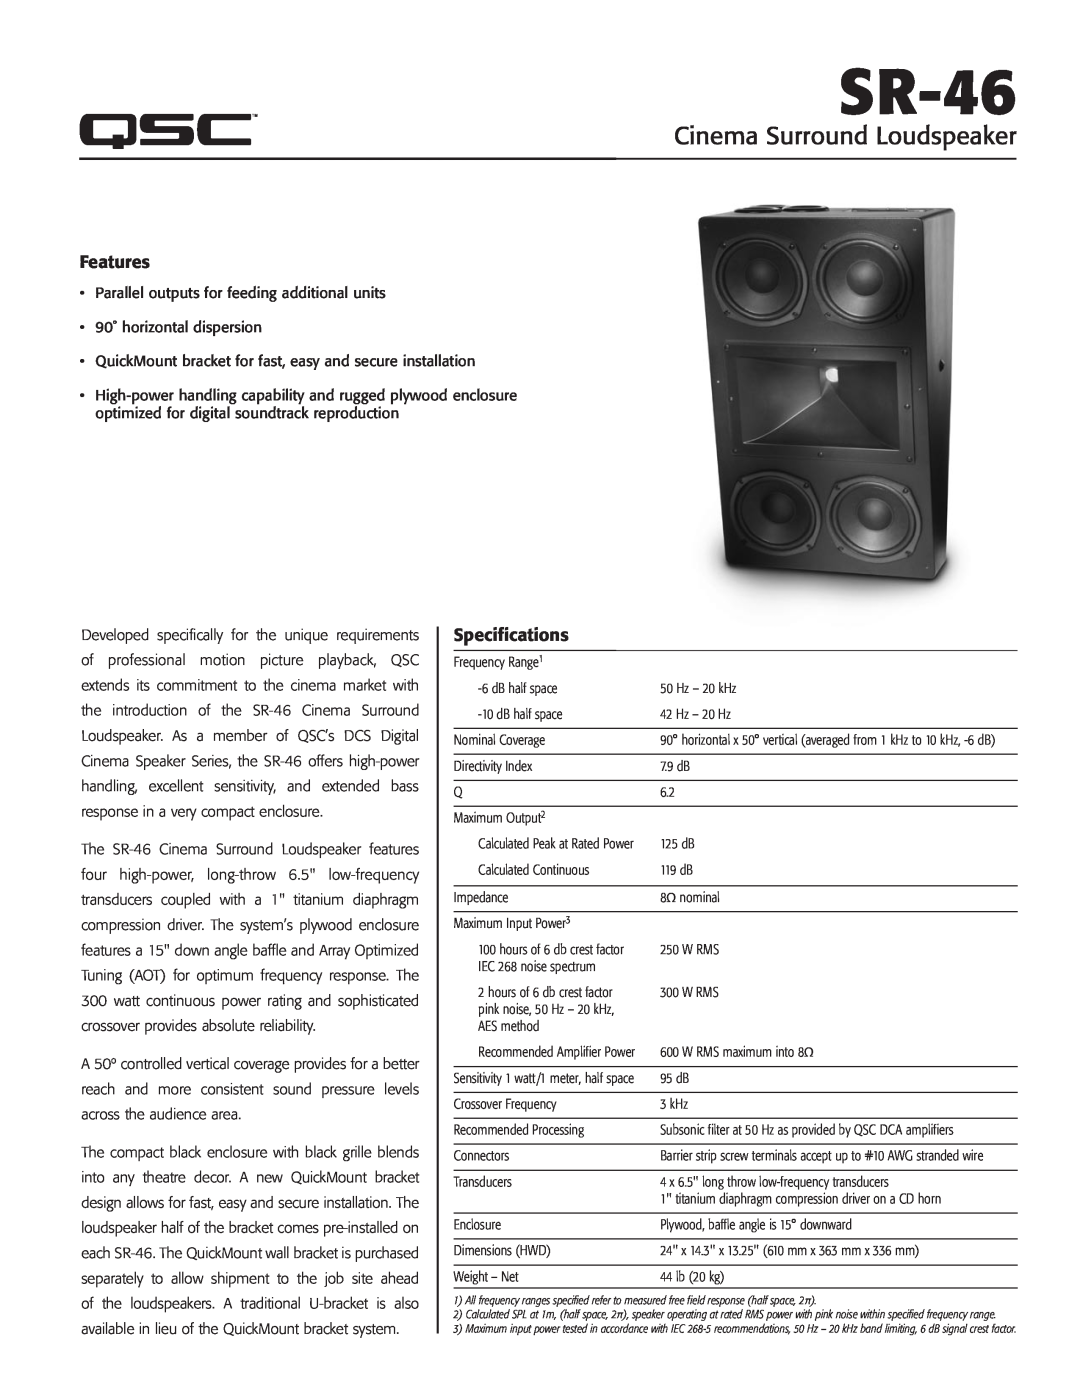 QSC Audio SR-46 specifications Features, Specifications, Cinema Surround Loudspeaker 